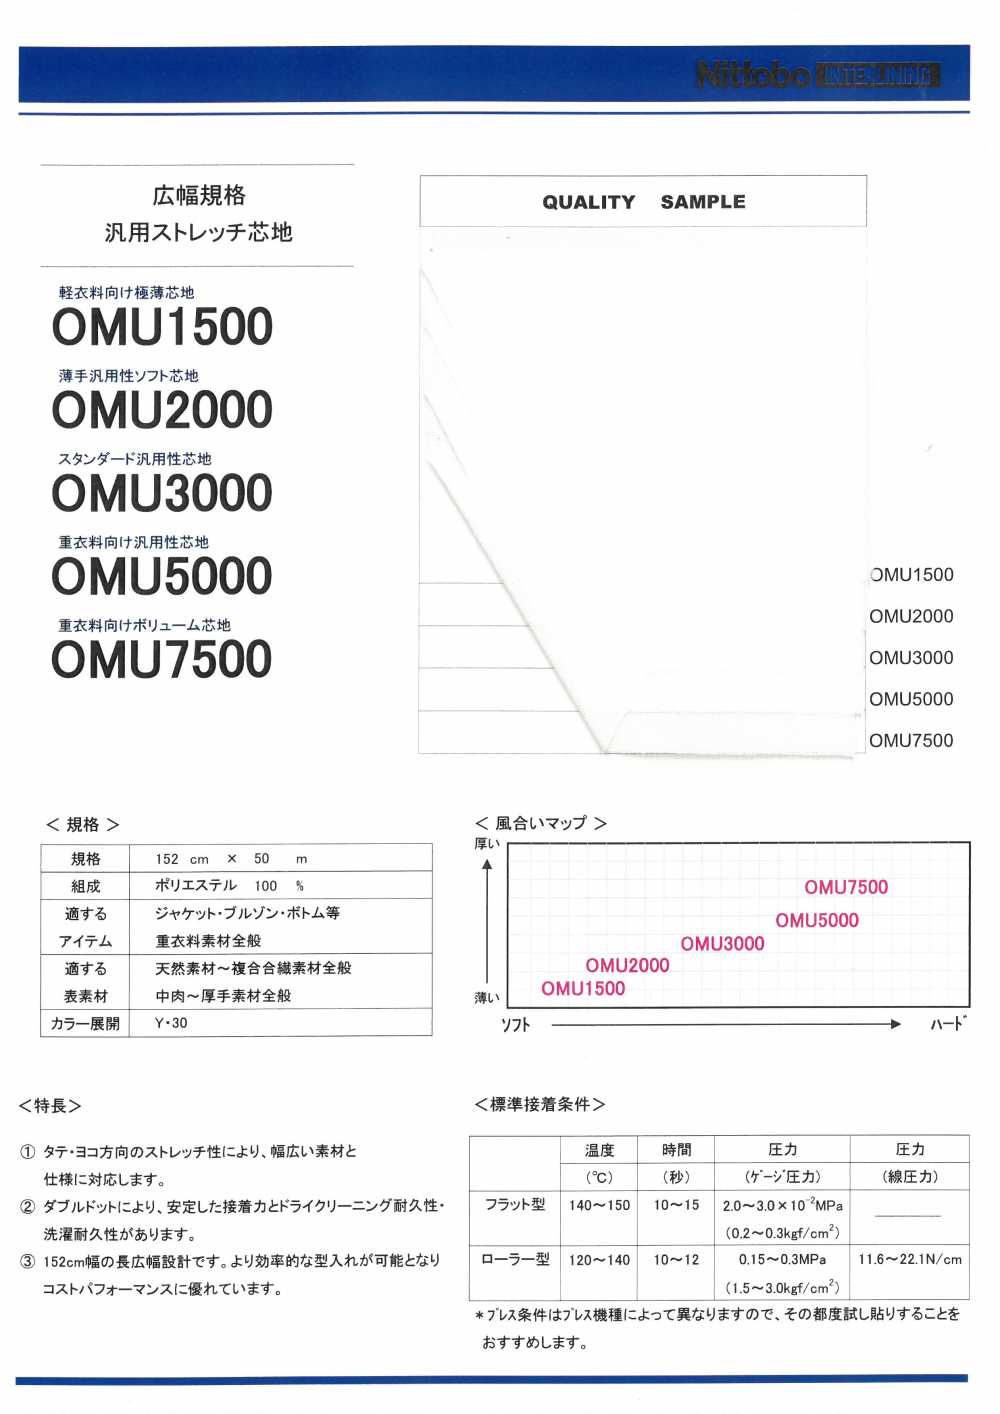 OMU7500 Volume Interlining For Heavy Clothing 75D Nittobo